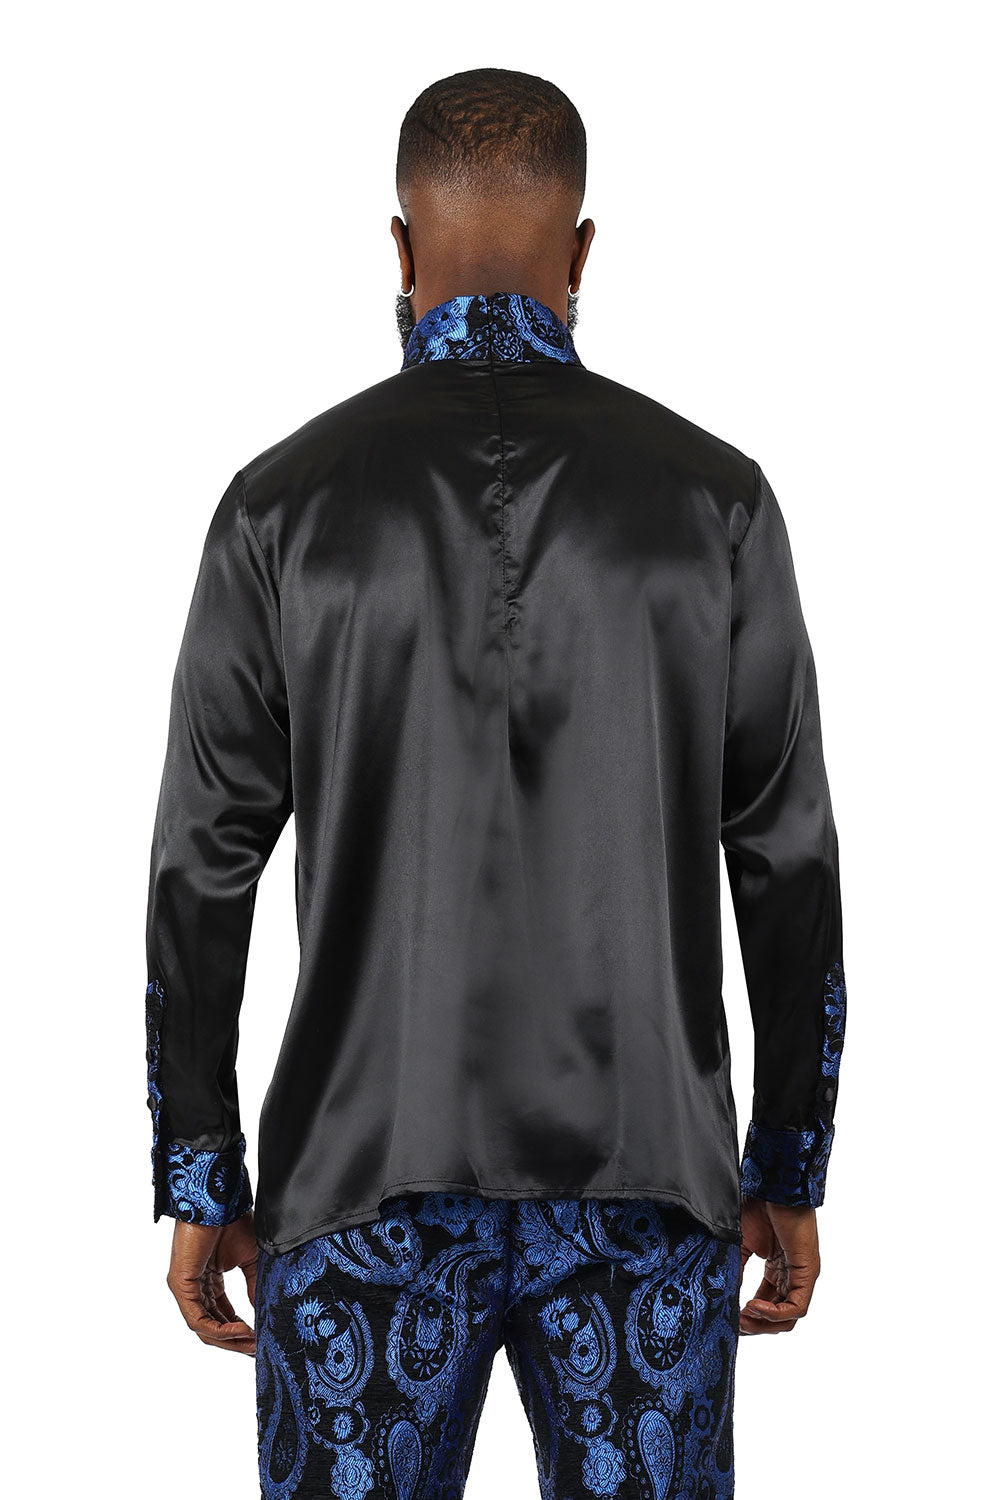 BARABAS Men's Paisley Long Sleeve Turtle Neck shirt 3MT05 Black and Royal